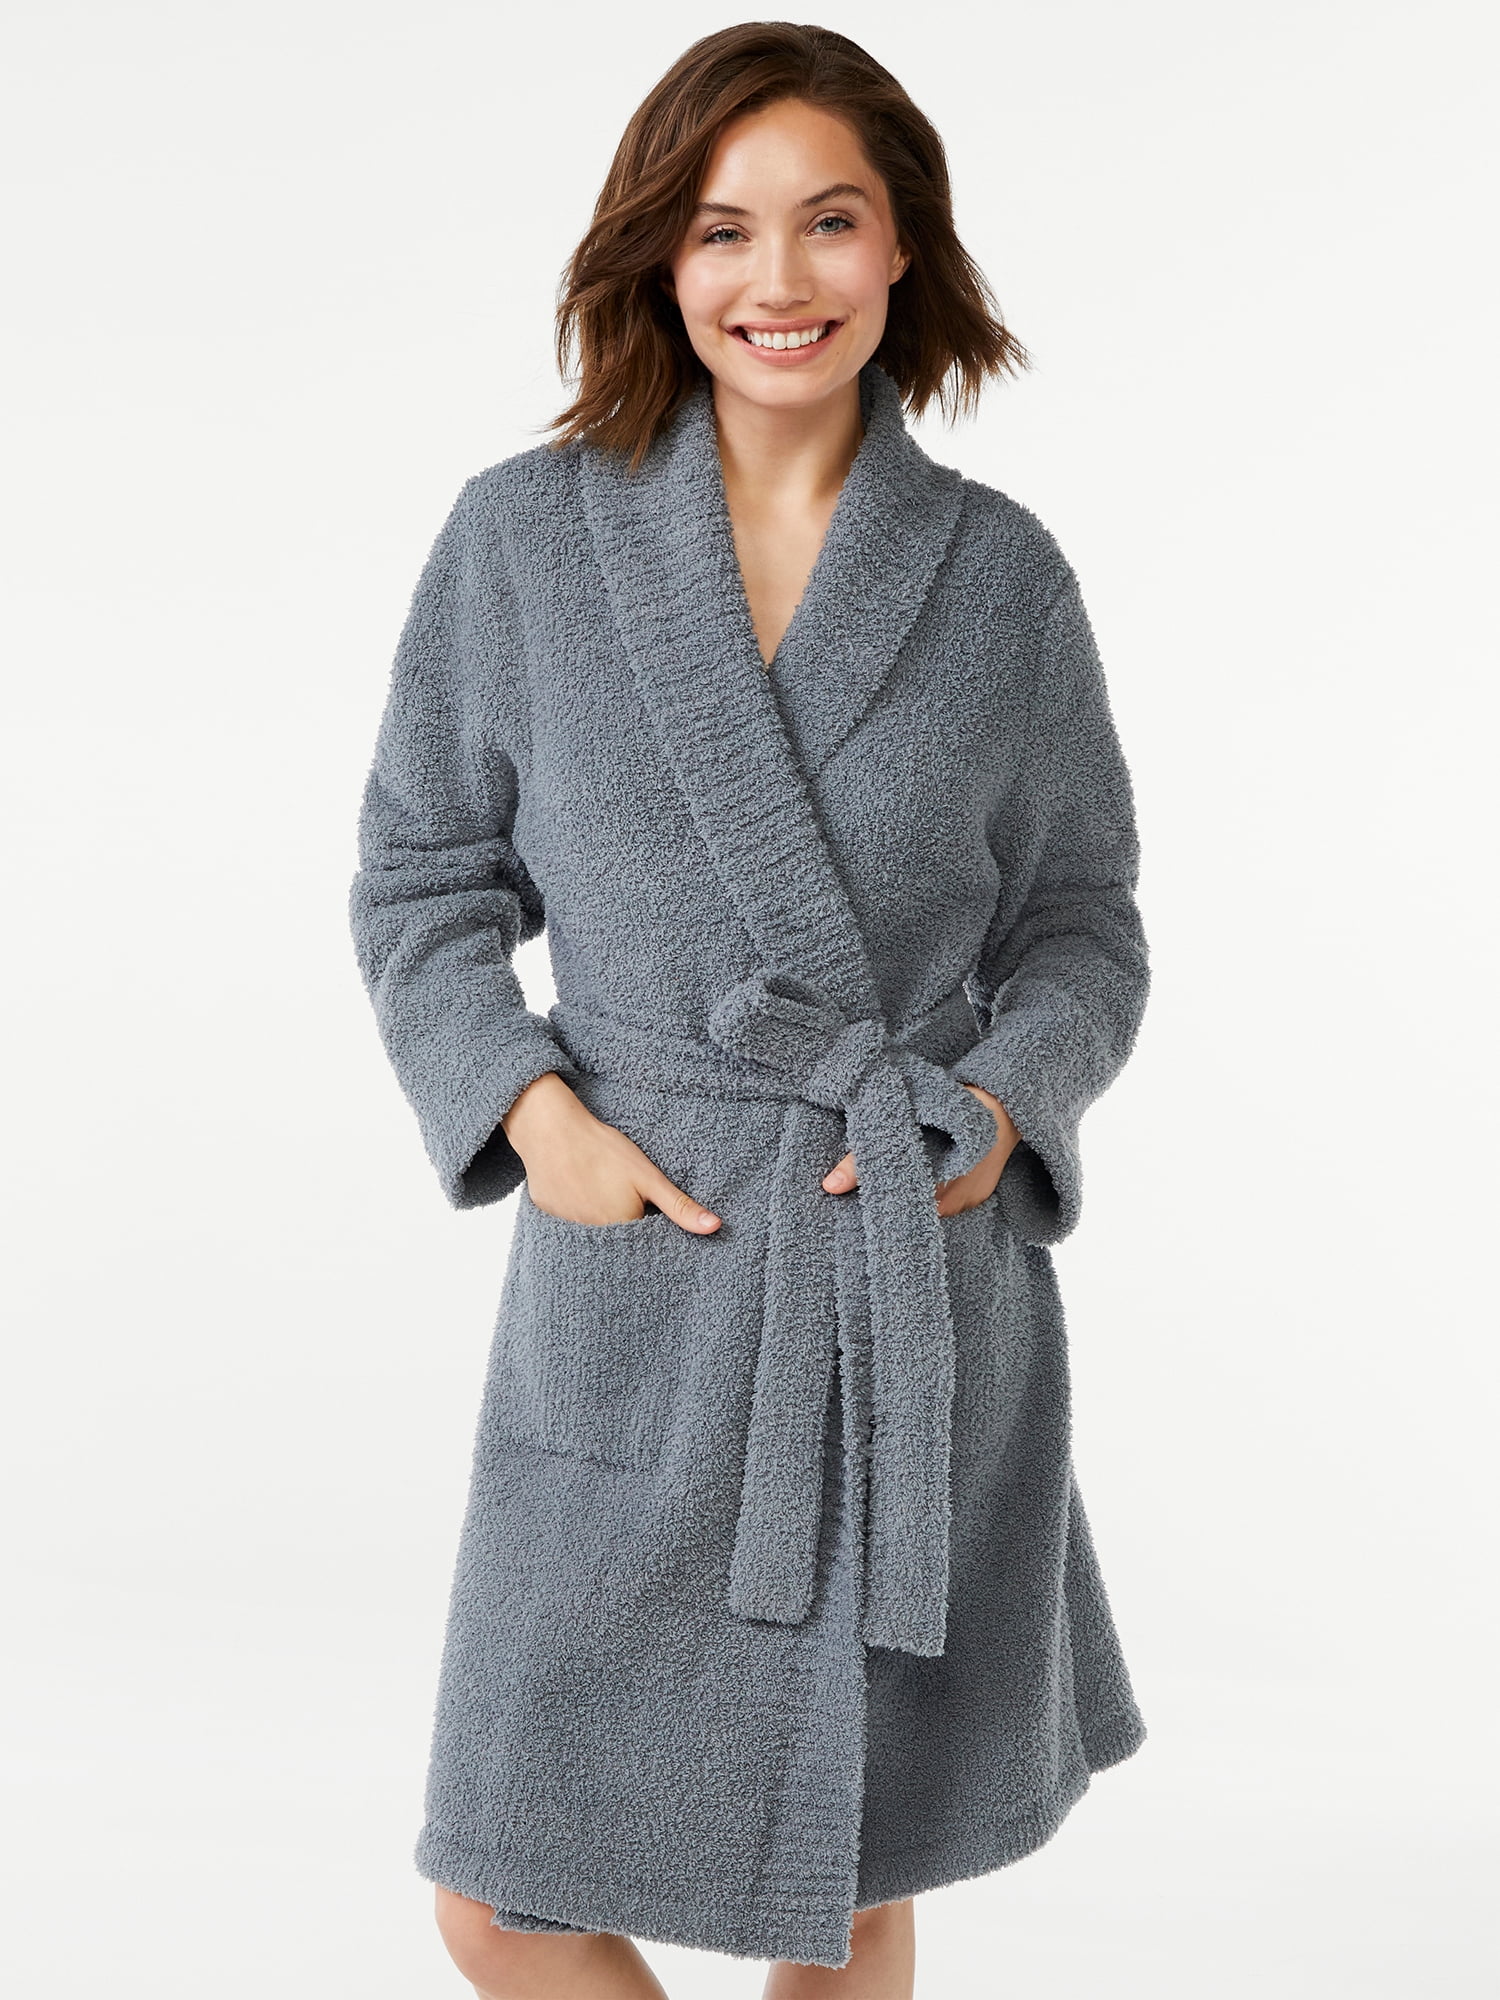 Joyspun Women's Sweater Knit Robe, Sizes up to 3X 